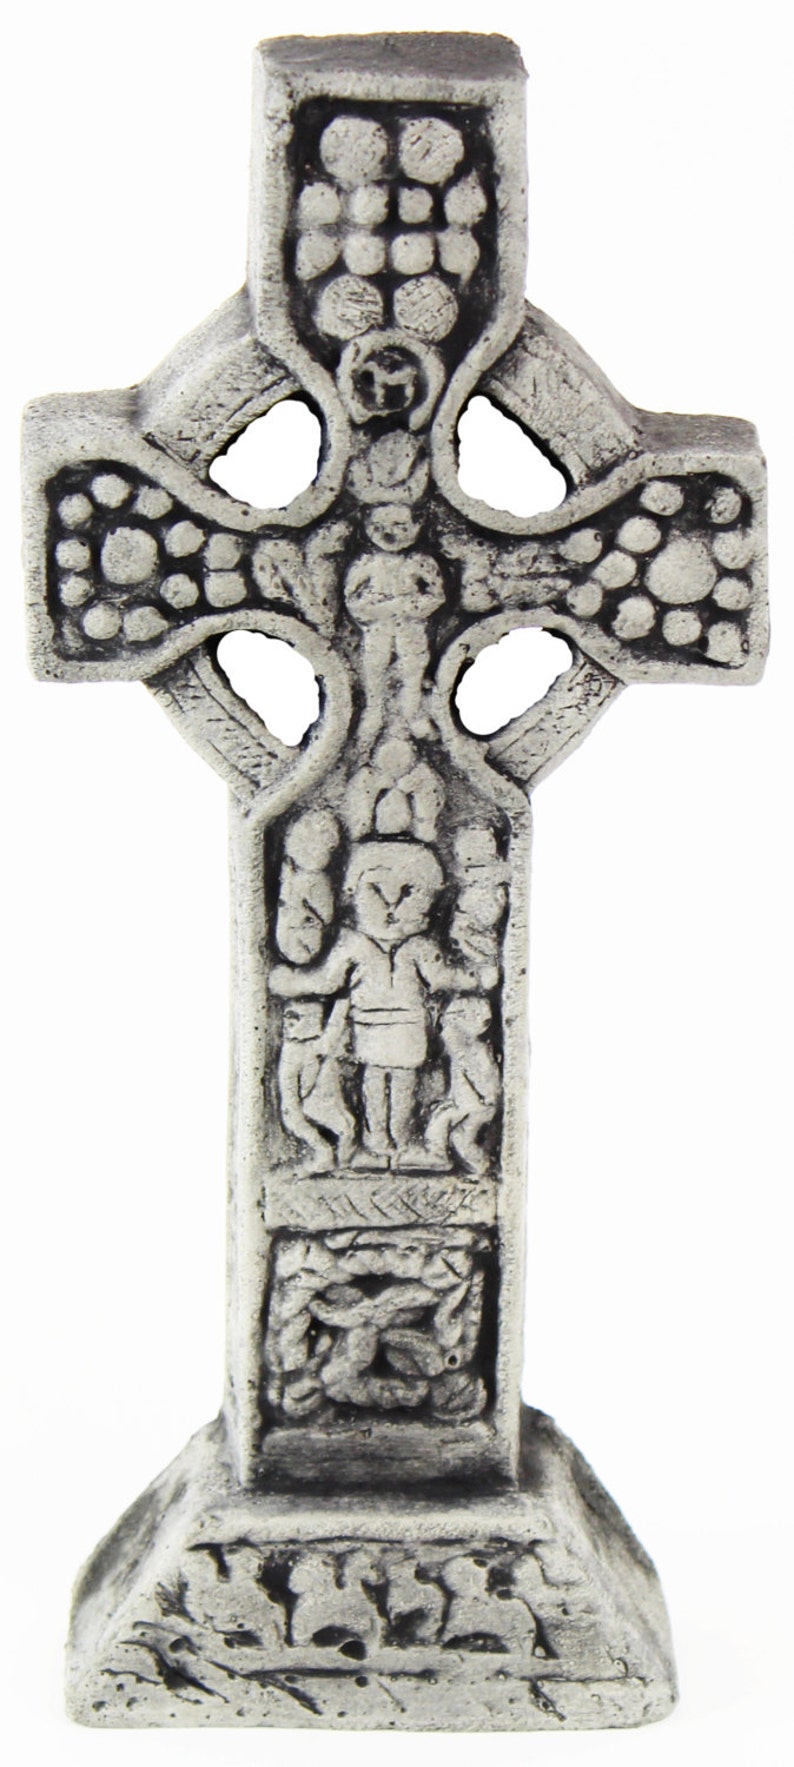 Clonmacnoise Cross Celtic Cross Concrete Garden Statue Religious Cement Irish Sculpture Catholic European Figuren Lamp Black